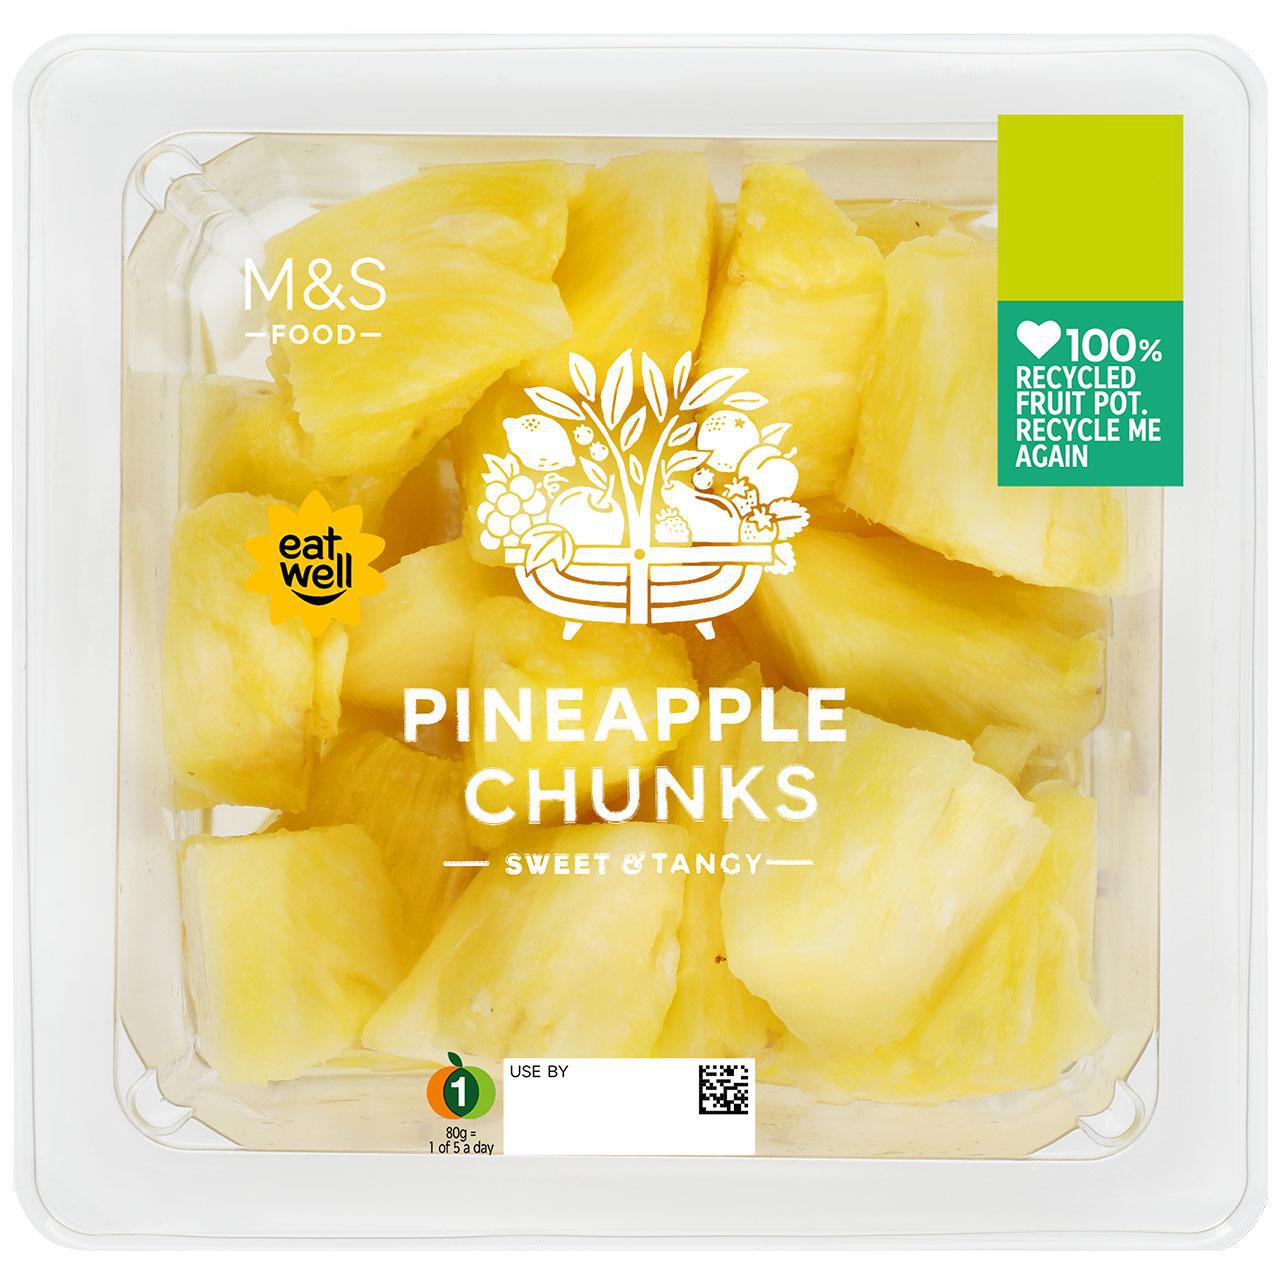 M&S Pineapple Chunks 350g